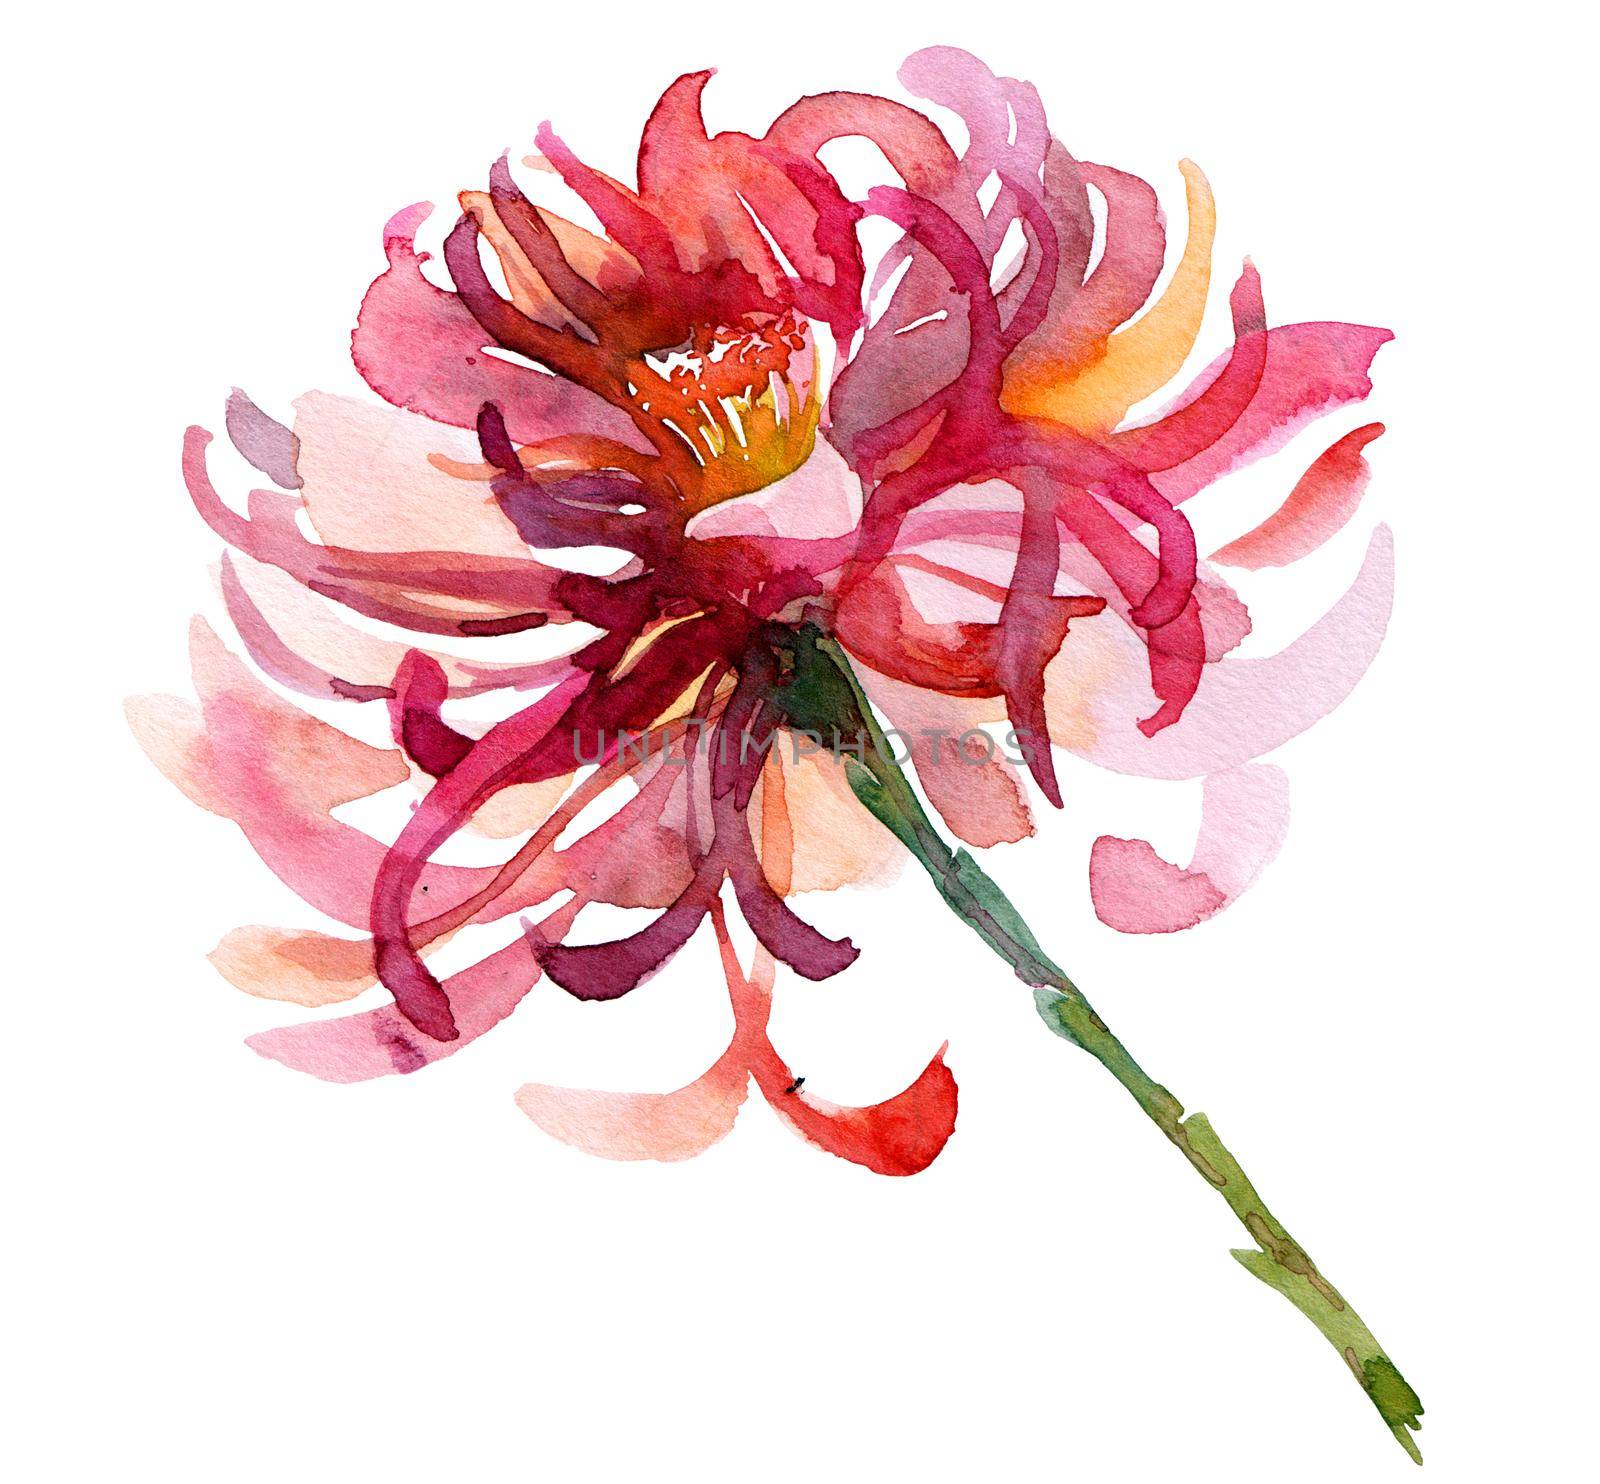 Watercolor illustration of chrysanthemum - pink flower on the stem